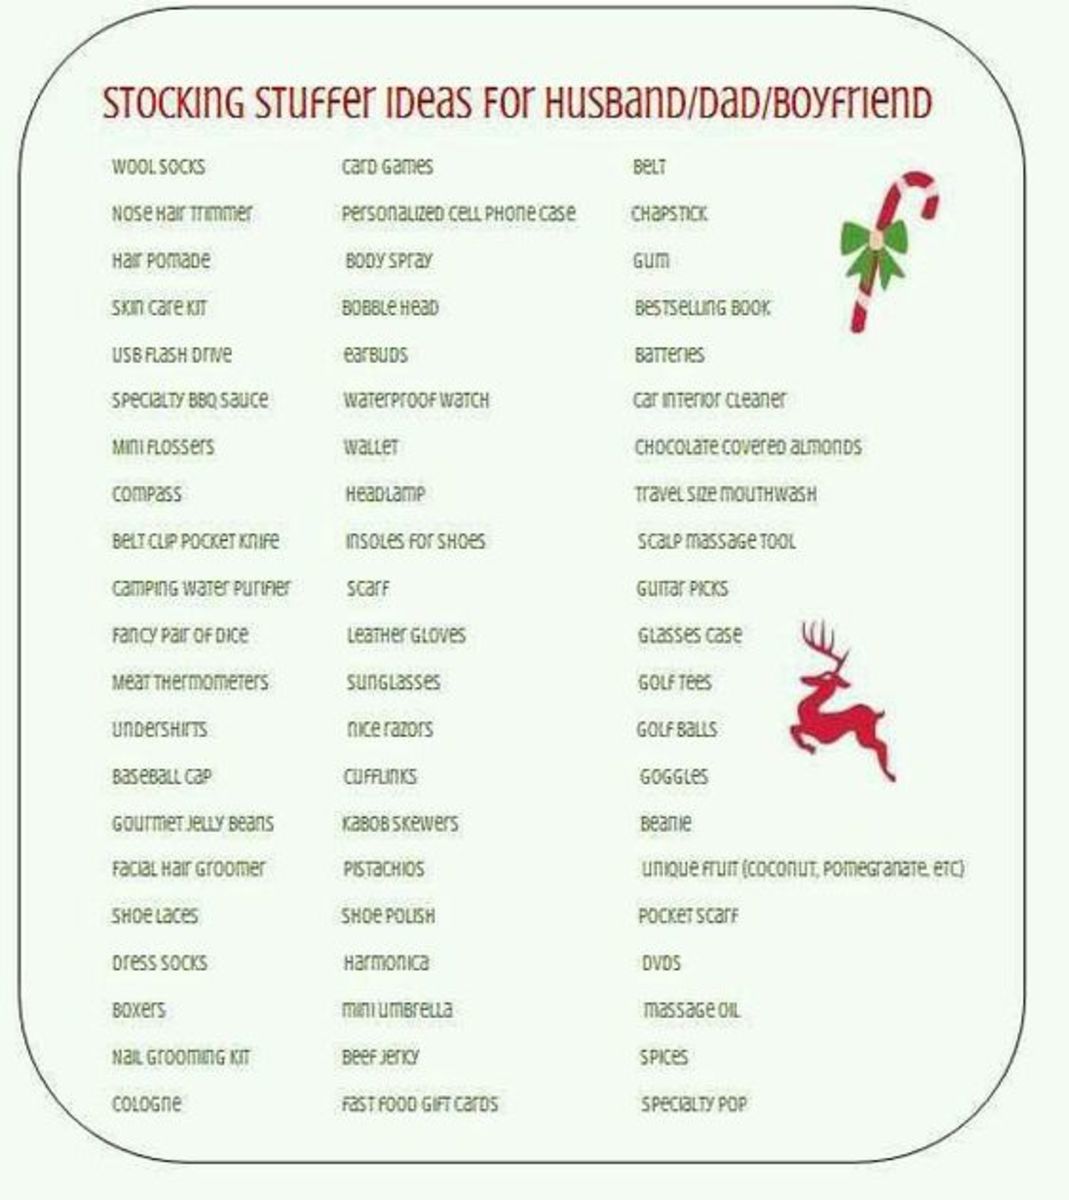 A list of stocking stuffer ideas